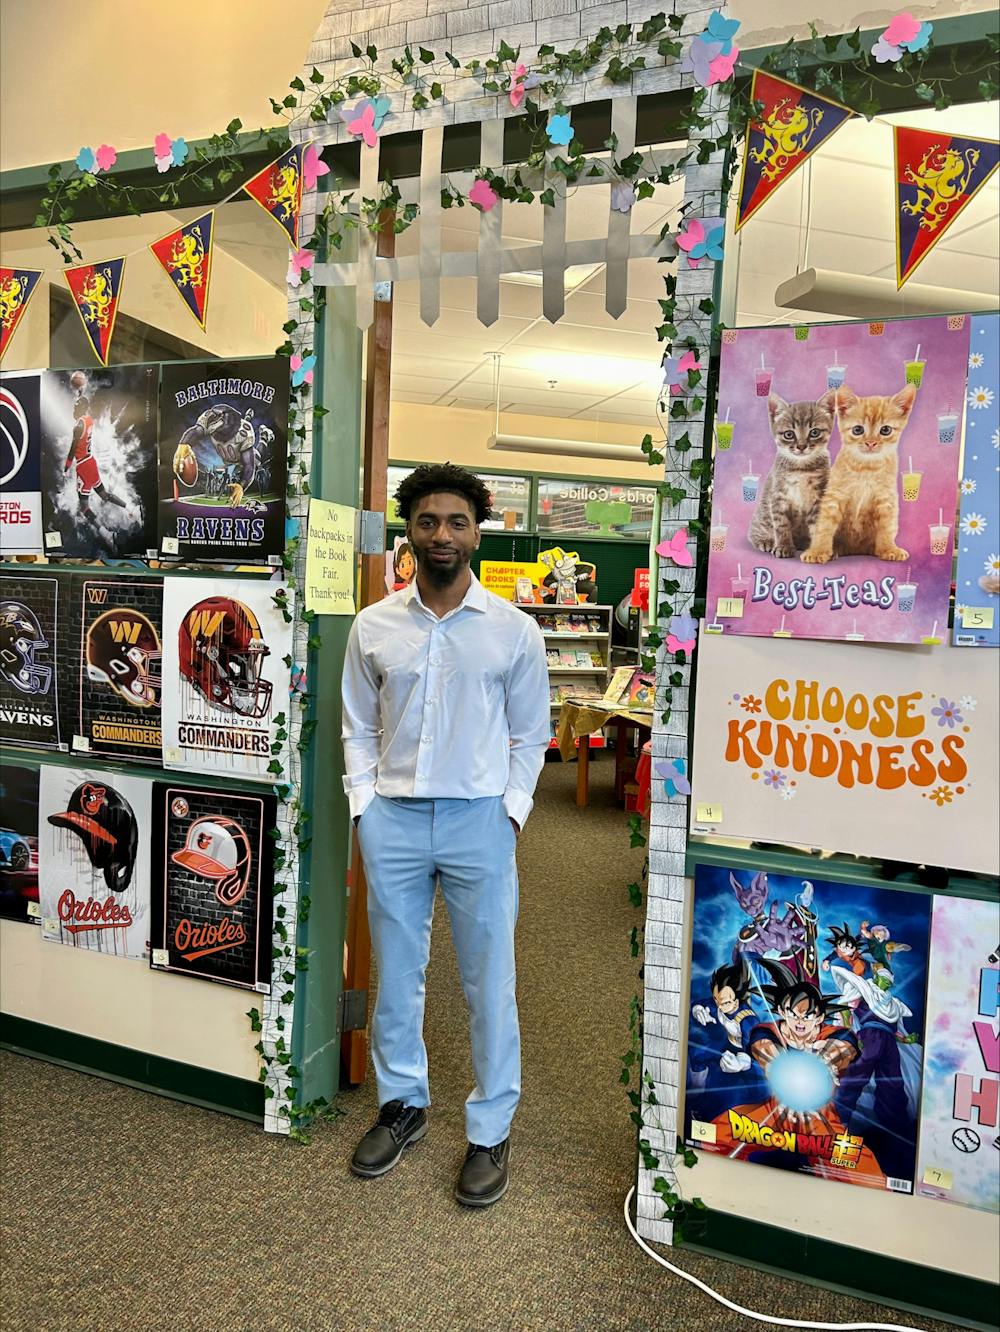 Shippensburg grad student funds Elementary school book fair